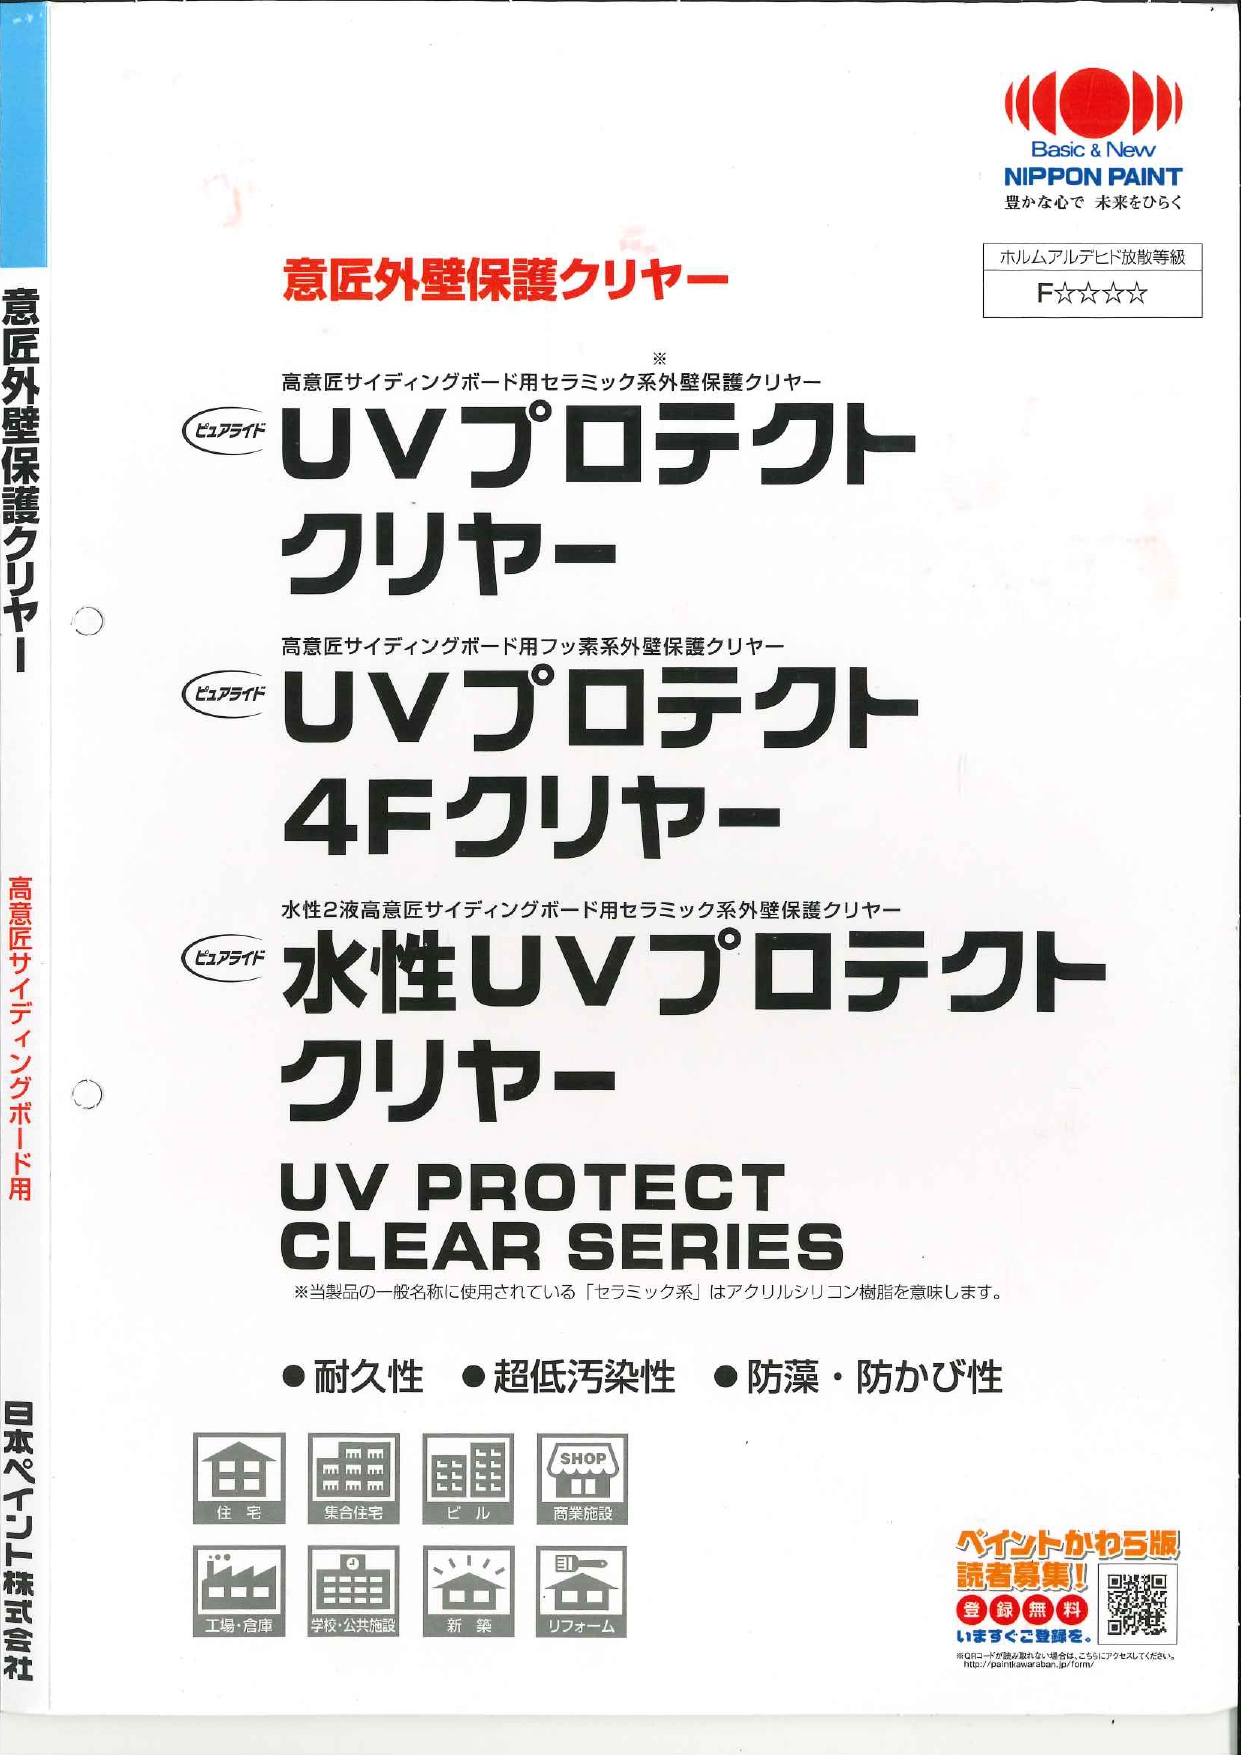 UVプロテクトクリヤー - 株式会社 冨士塗装